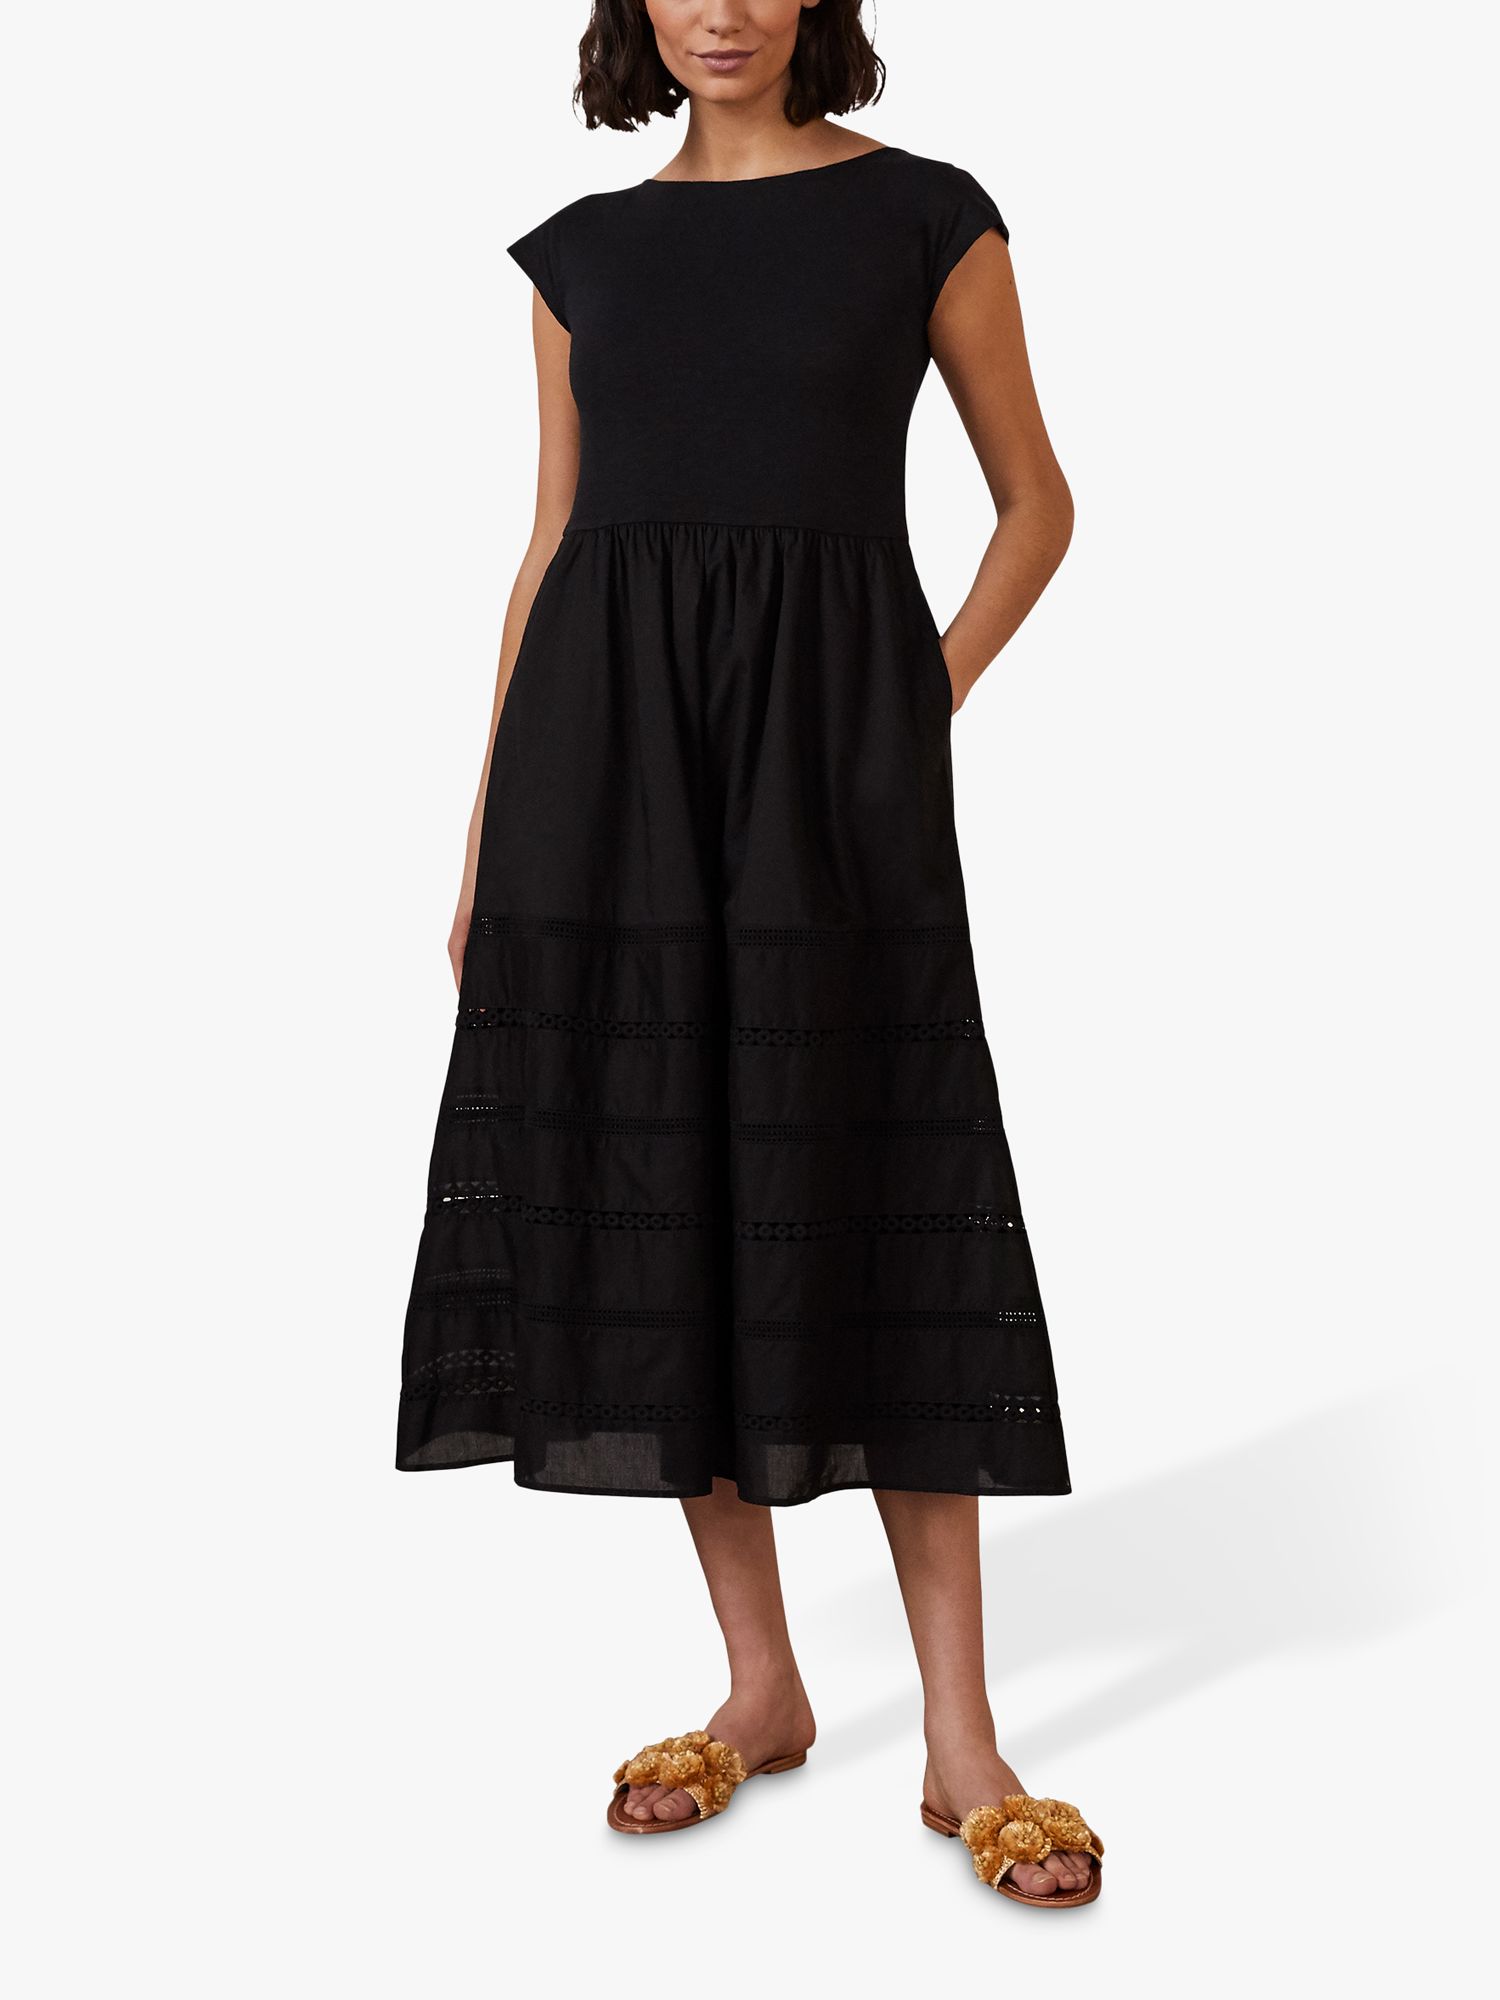 Boden Trim Midi Dress, Black at John Lewis & Partners